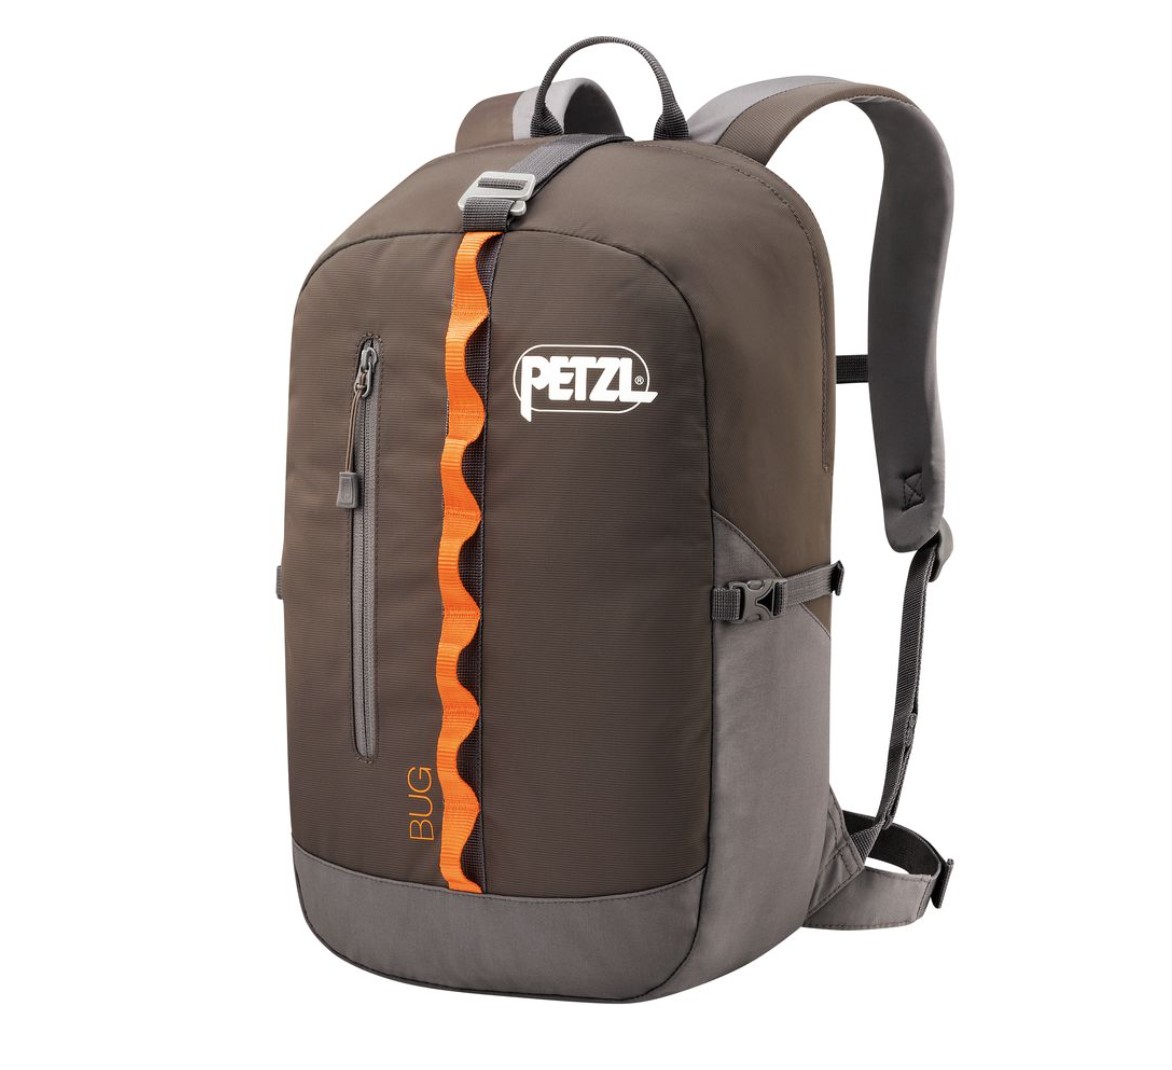 petzl bug climbing backpack review